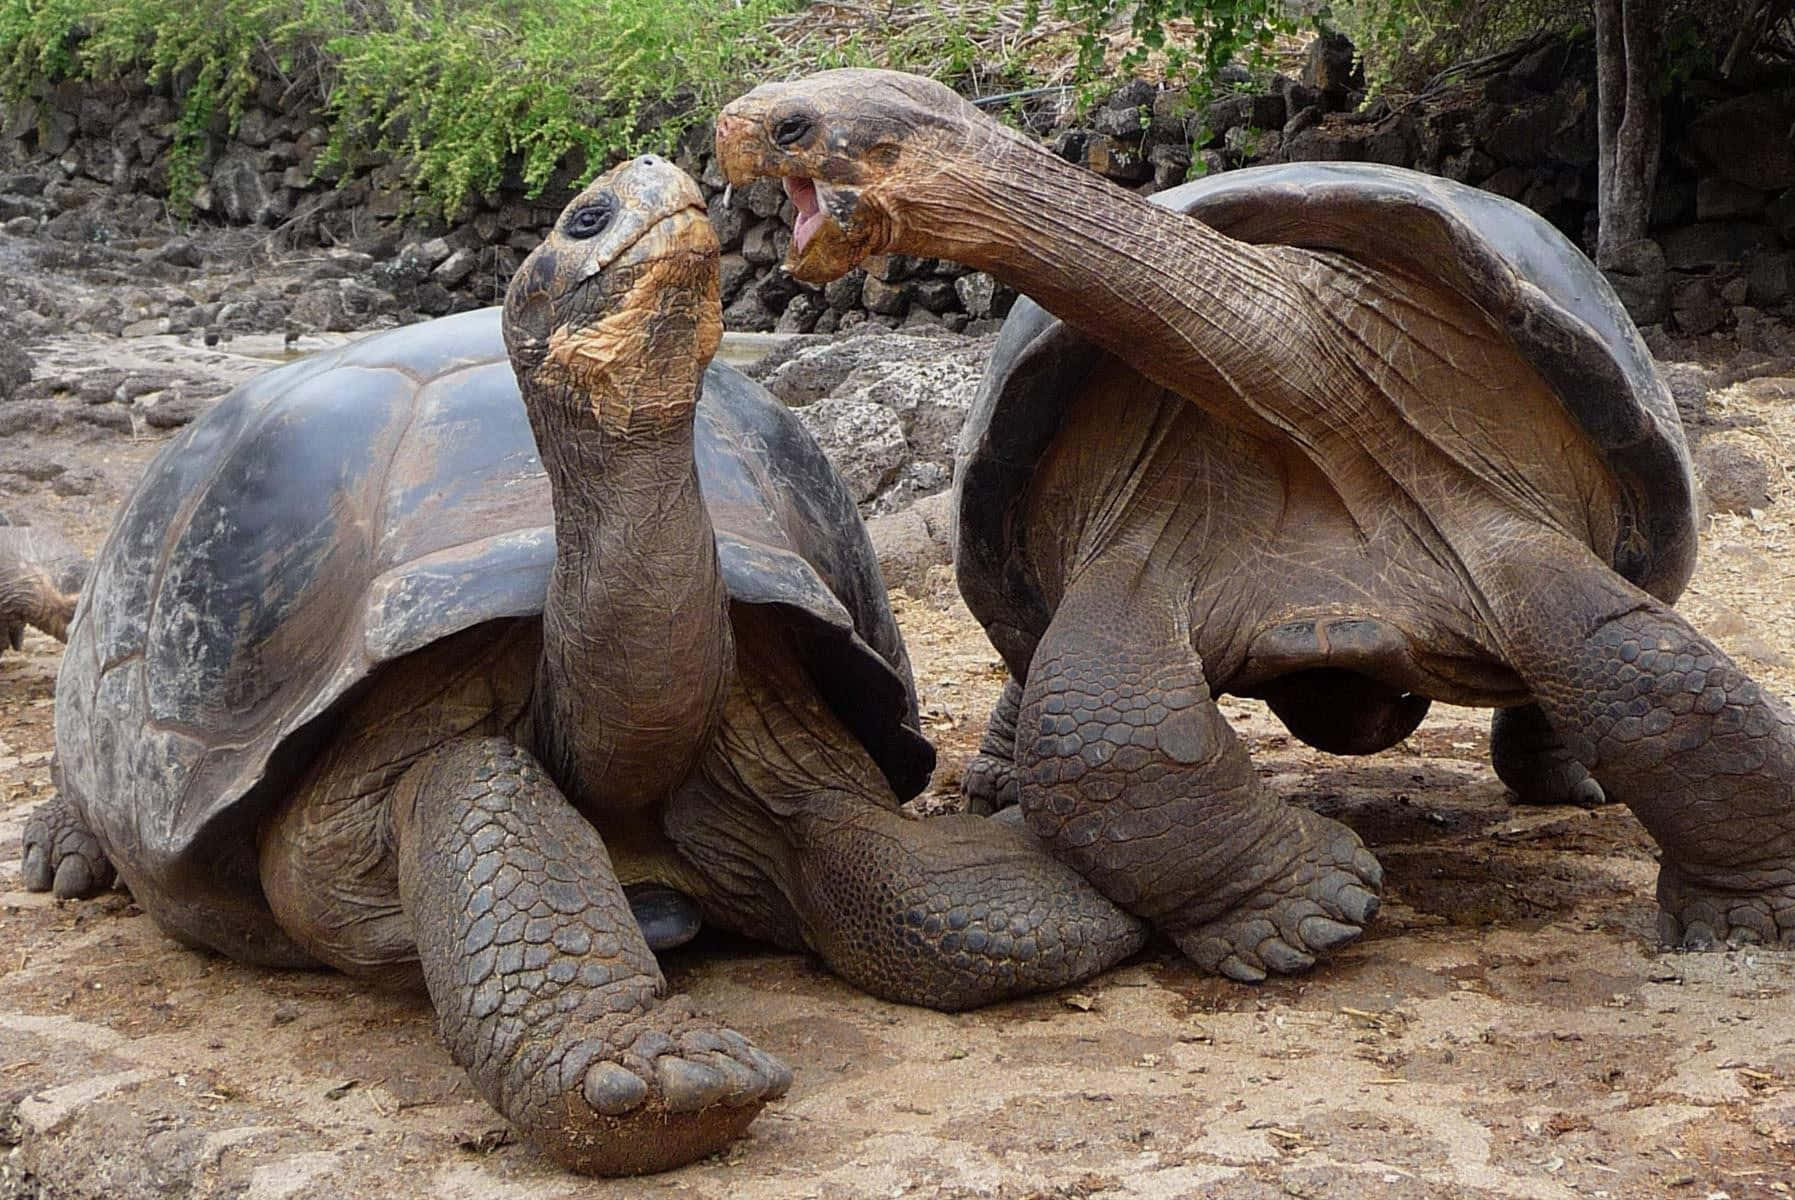 A beautiful tortoise exploring its natural habitat